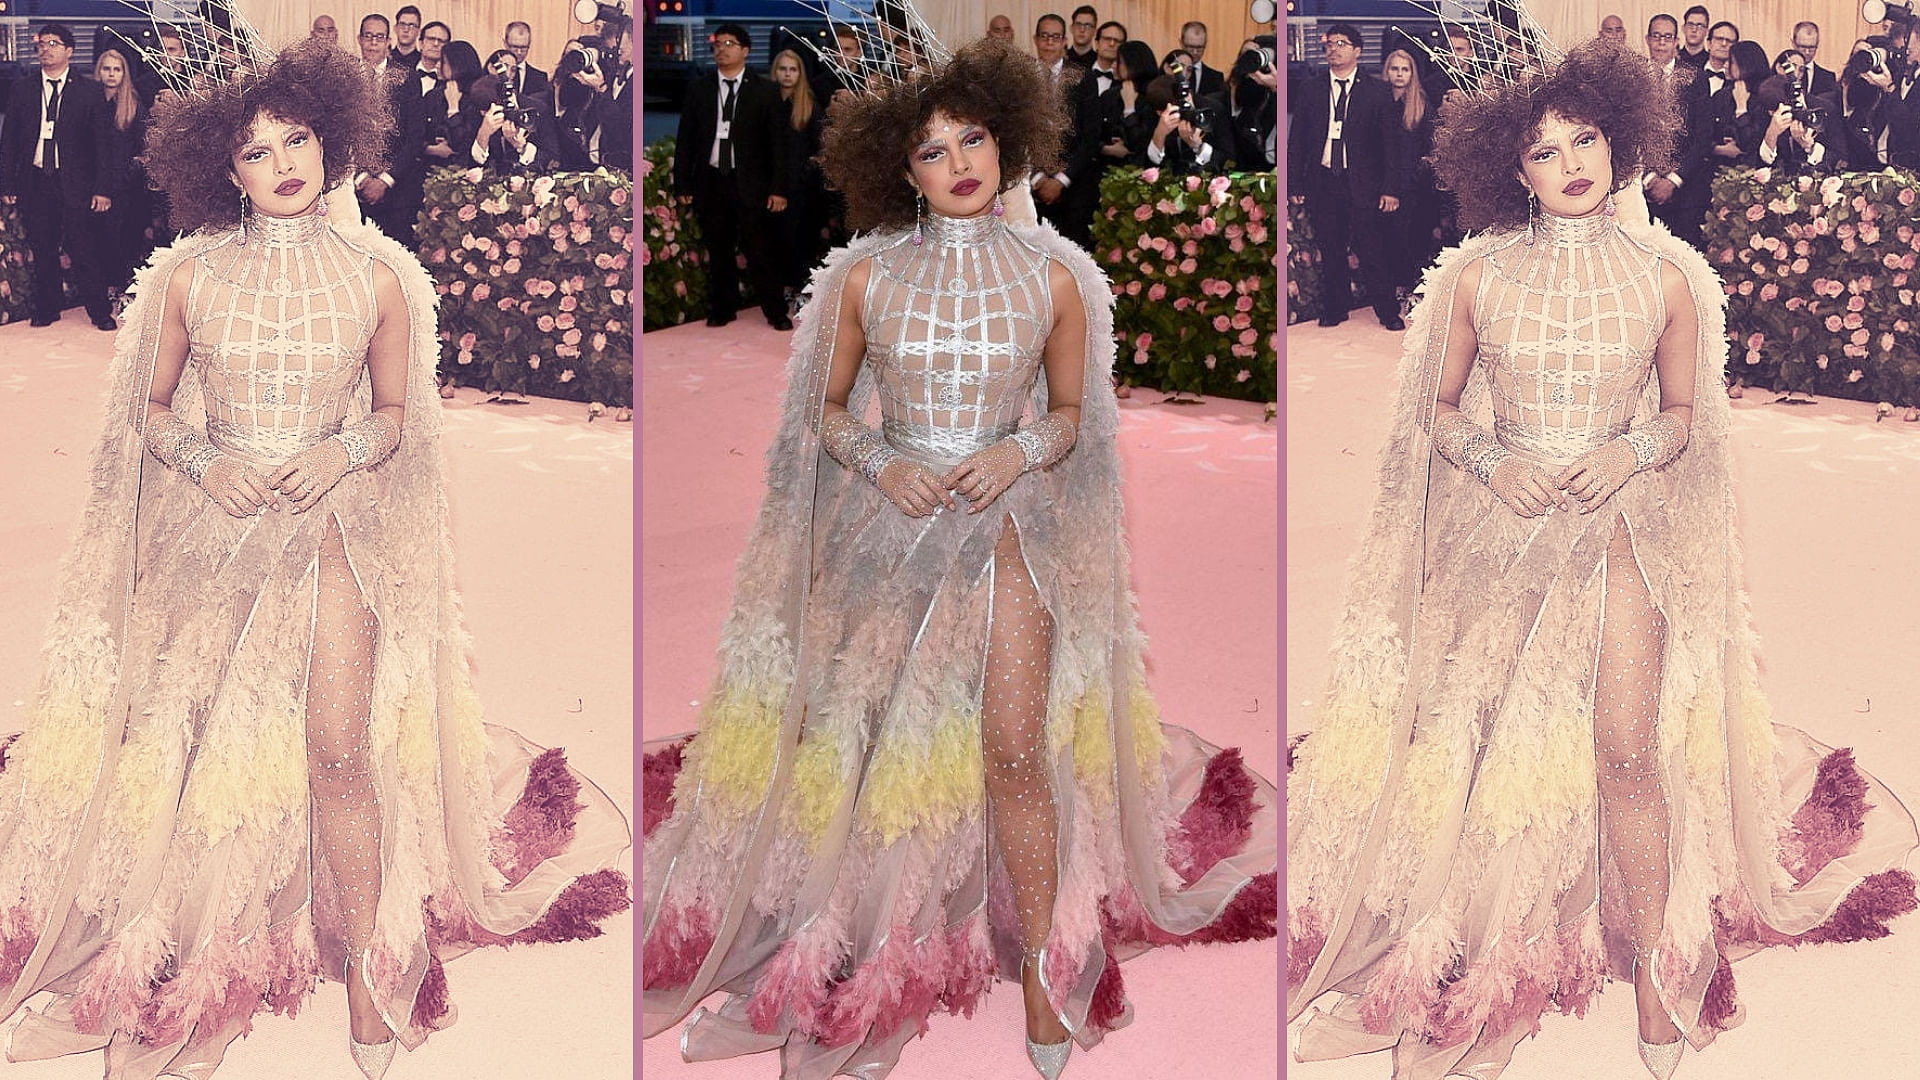 Priyanka Chopra’s Dior outfit at the Met Gala 2019 was inspired by Marie Antoinette.